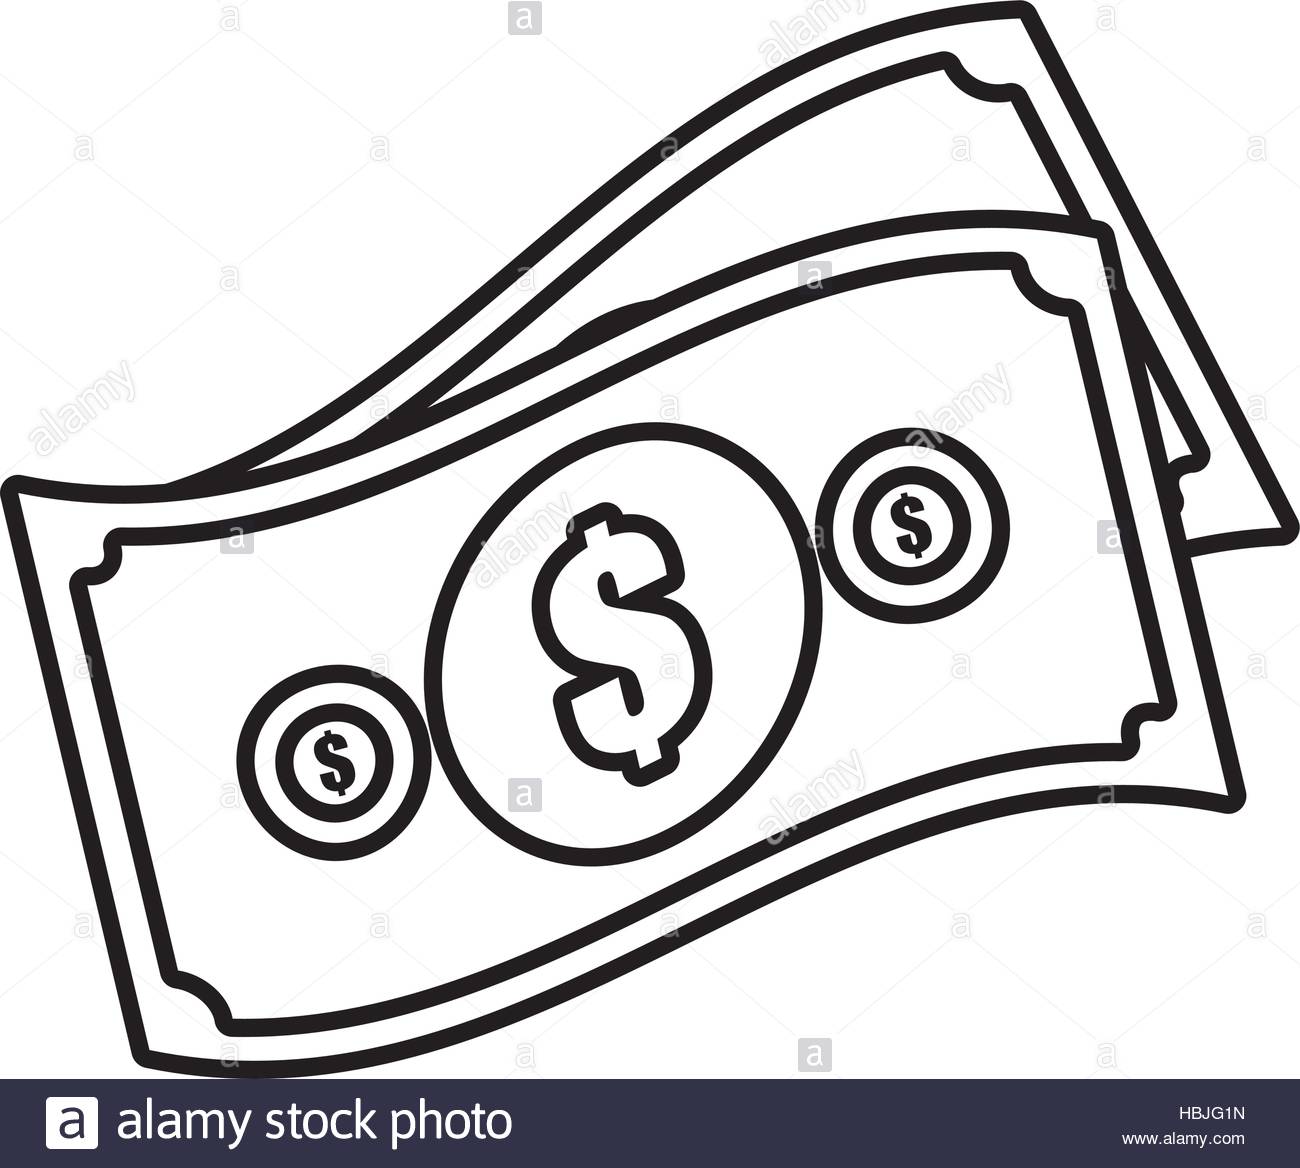 Dollar Bills Drawing at GetDrawings Free download